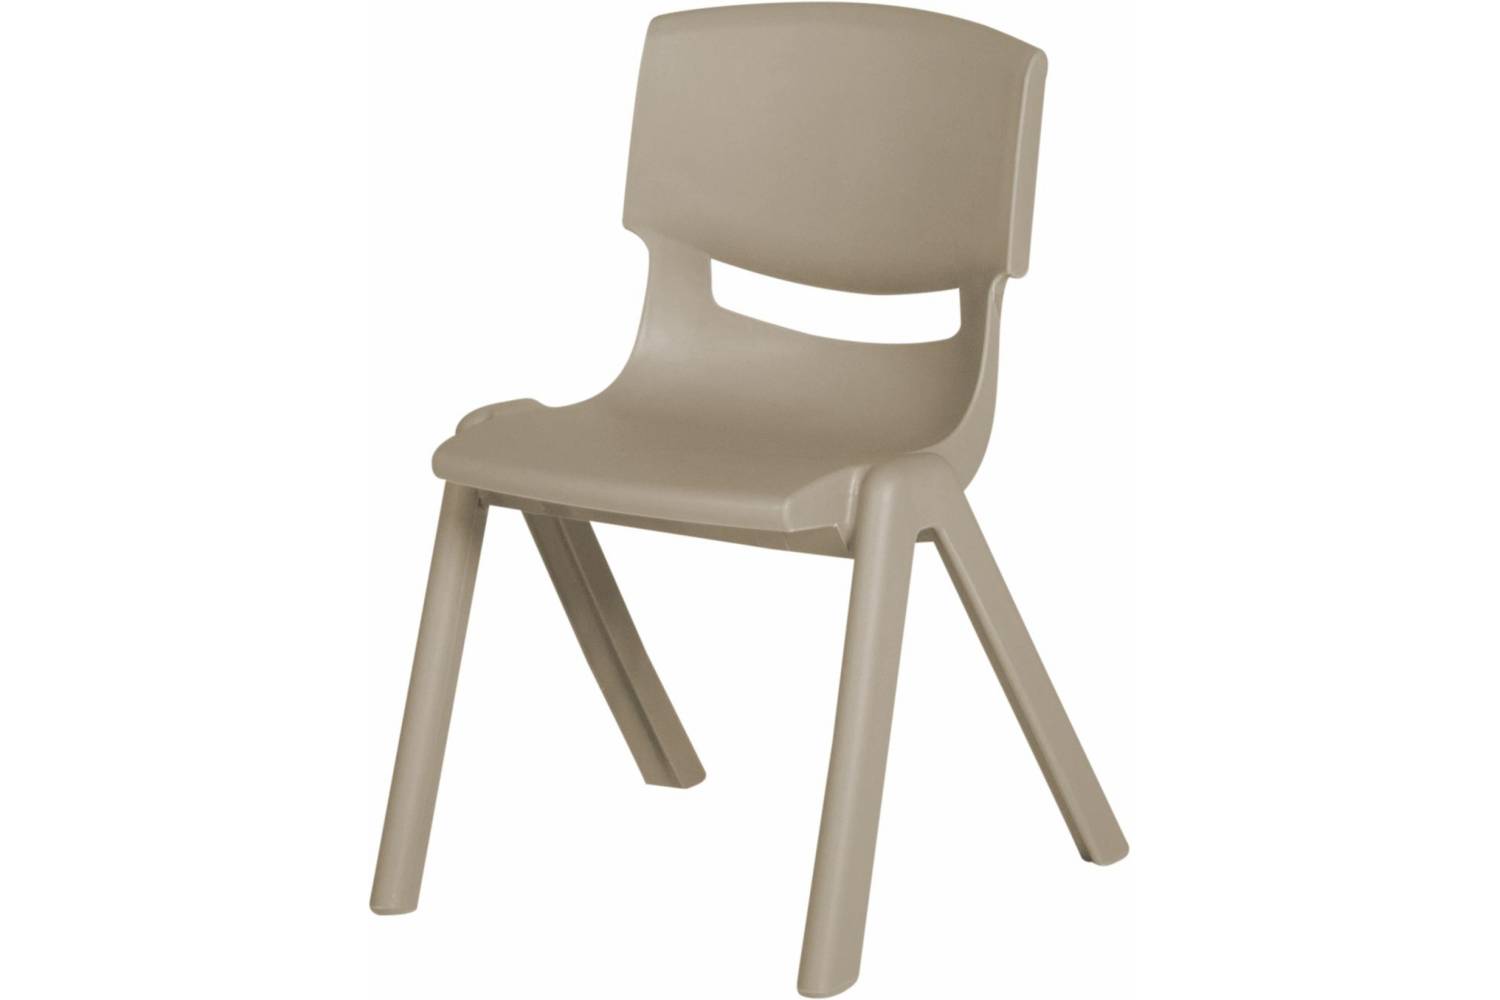 Pumice Ox Chair